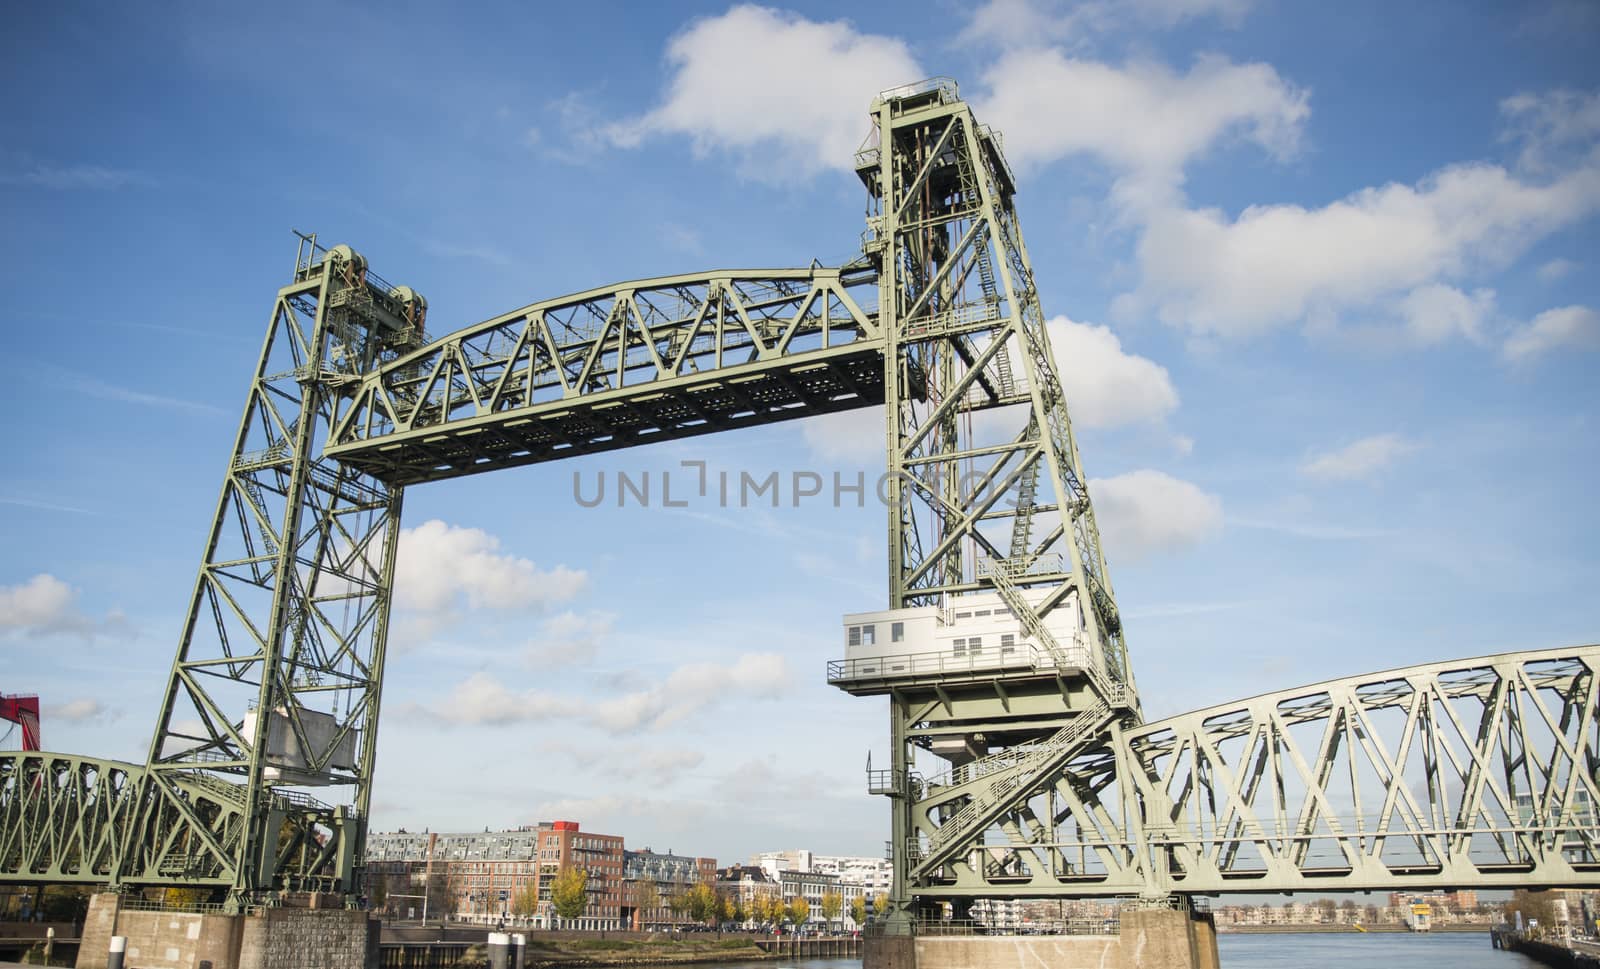 the old railraod bridge in Rotterdam by compuinfoto